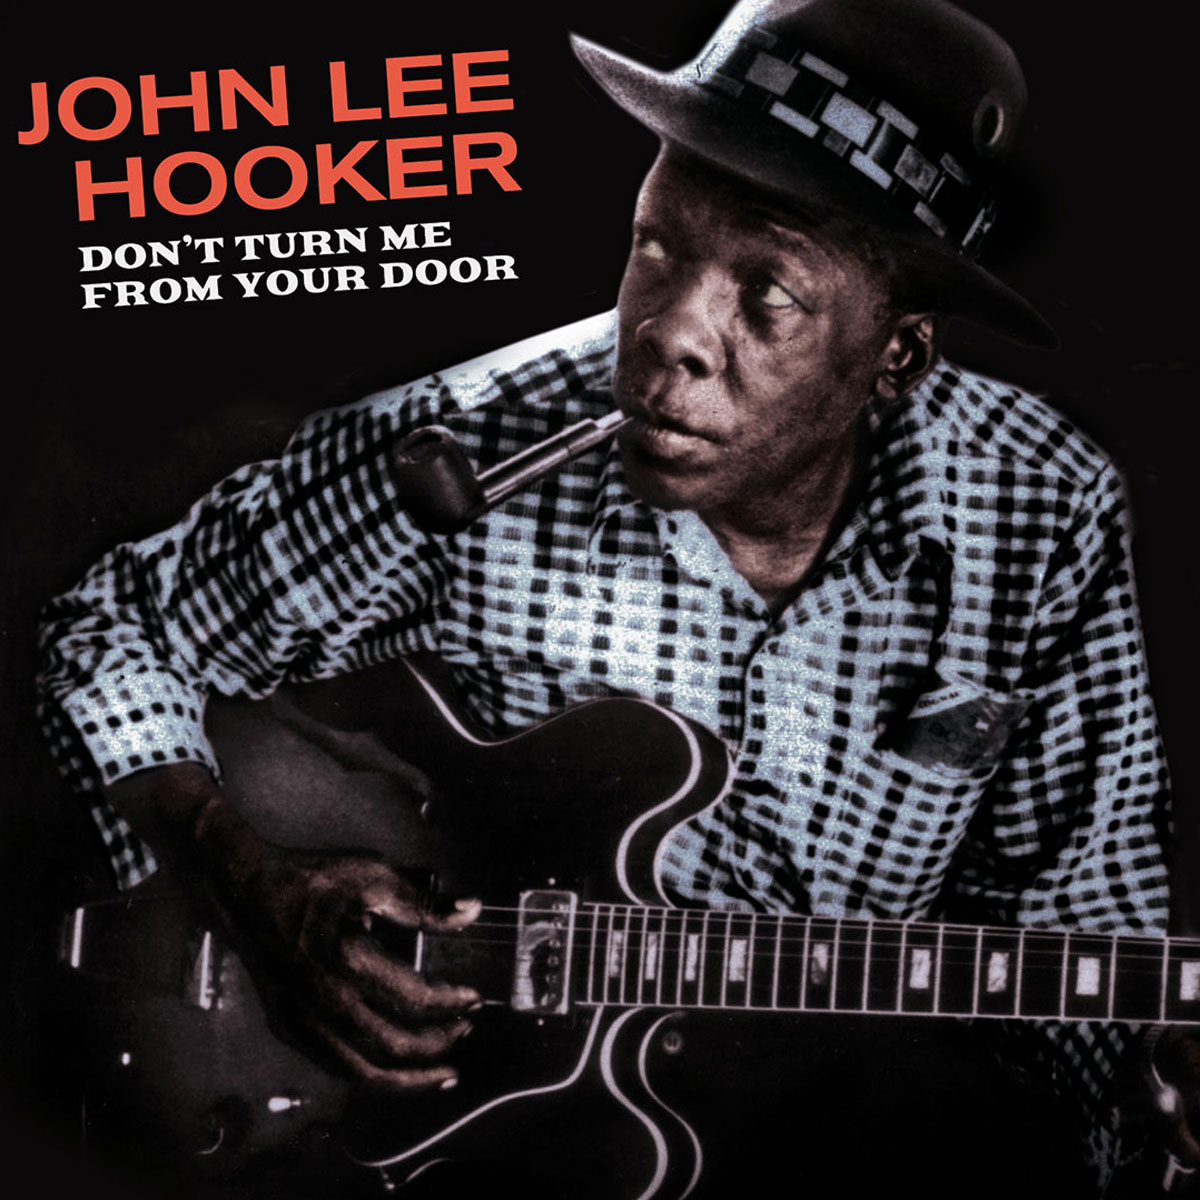 John Lee Hooker - The Complete Album - John Lee Hooker - LP